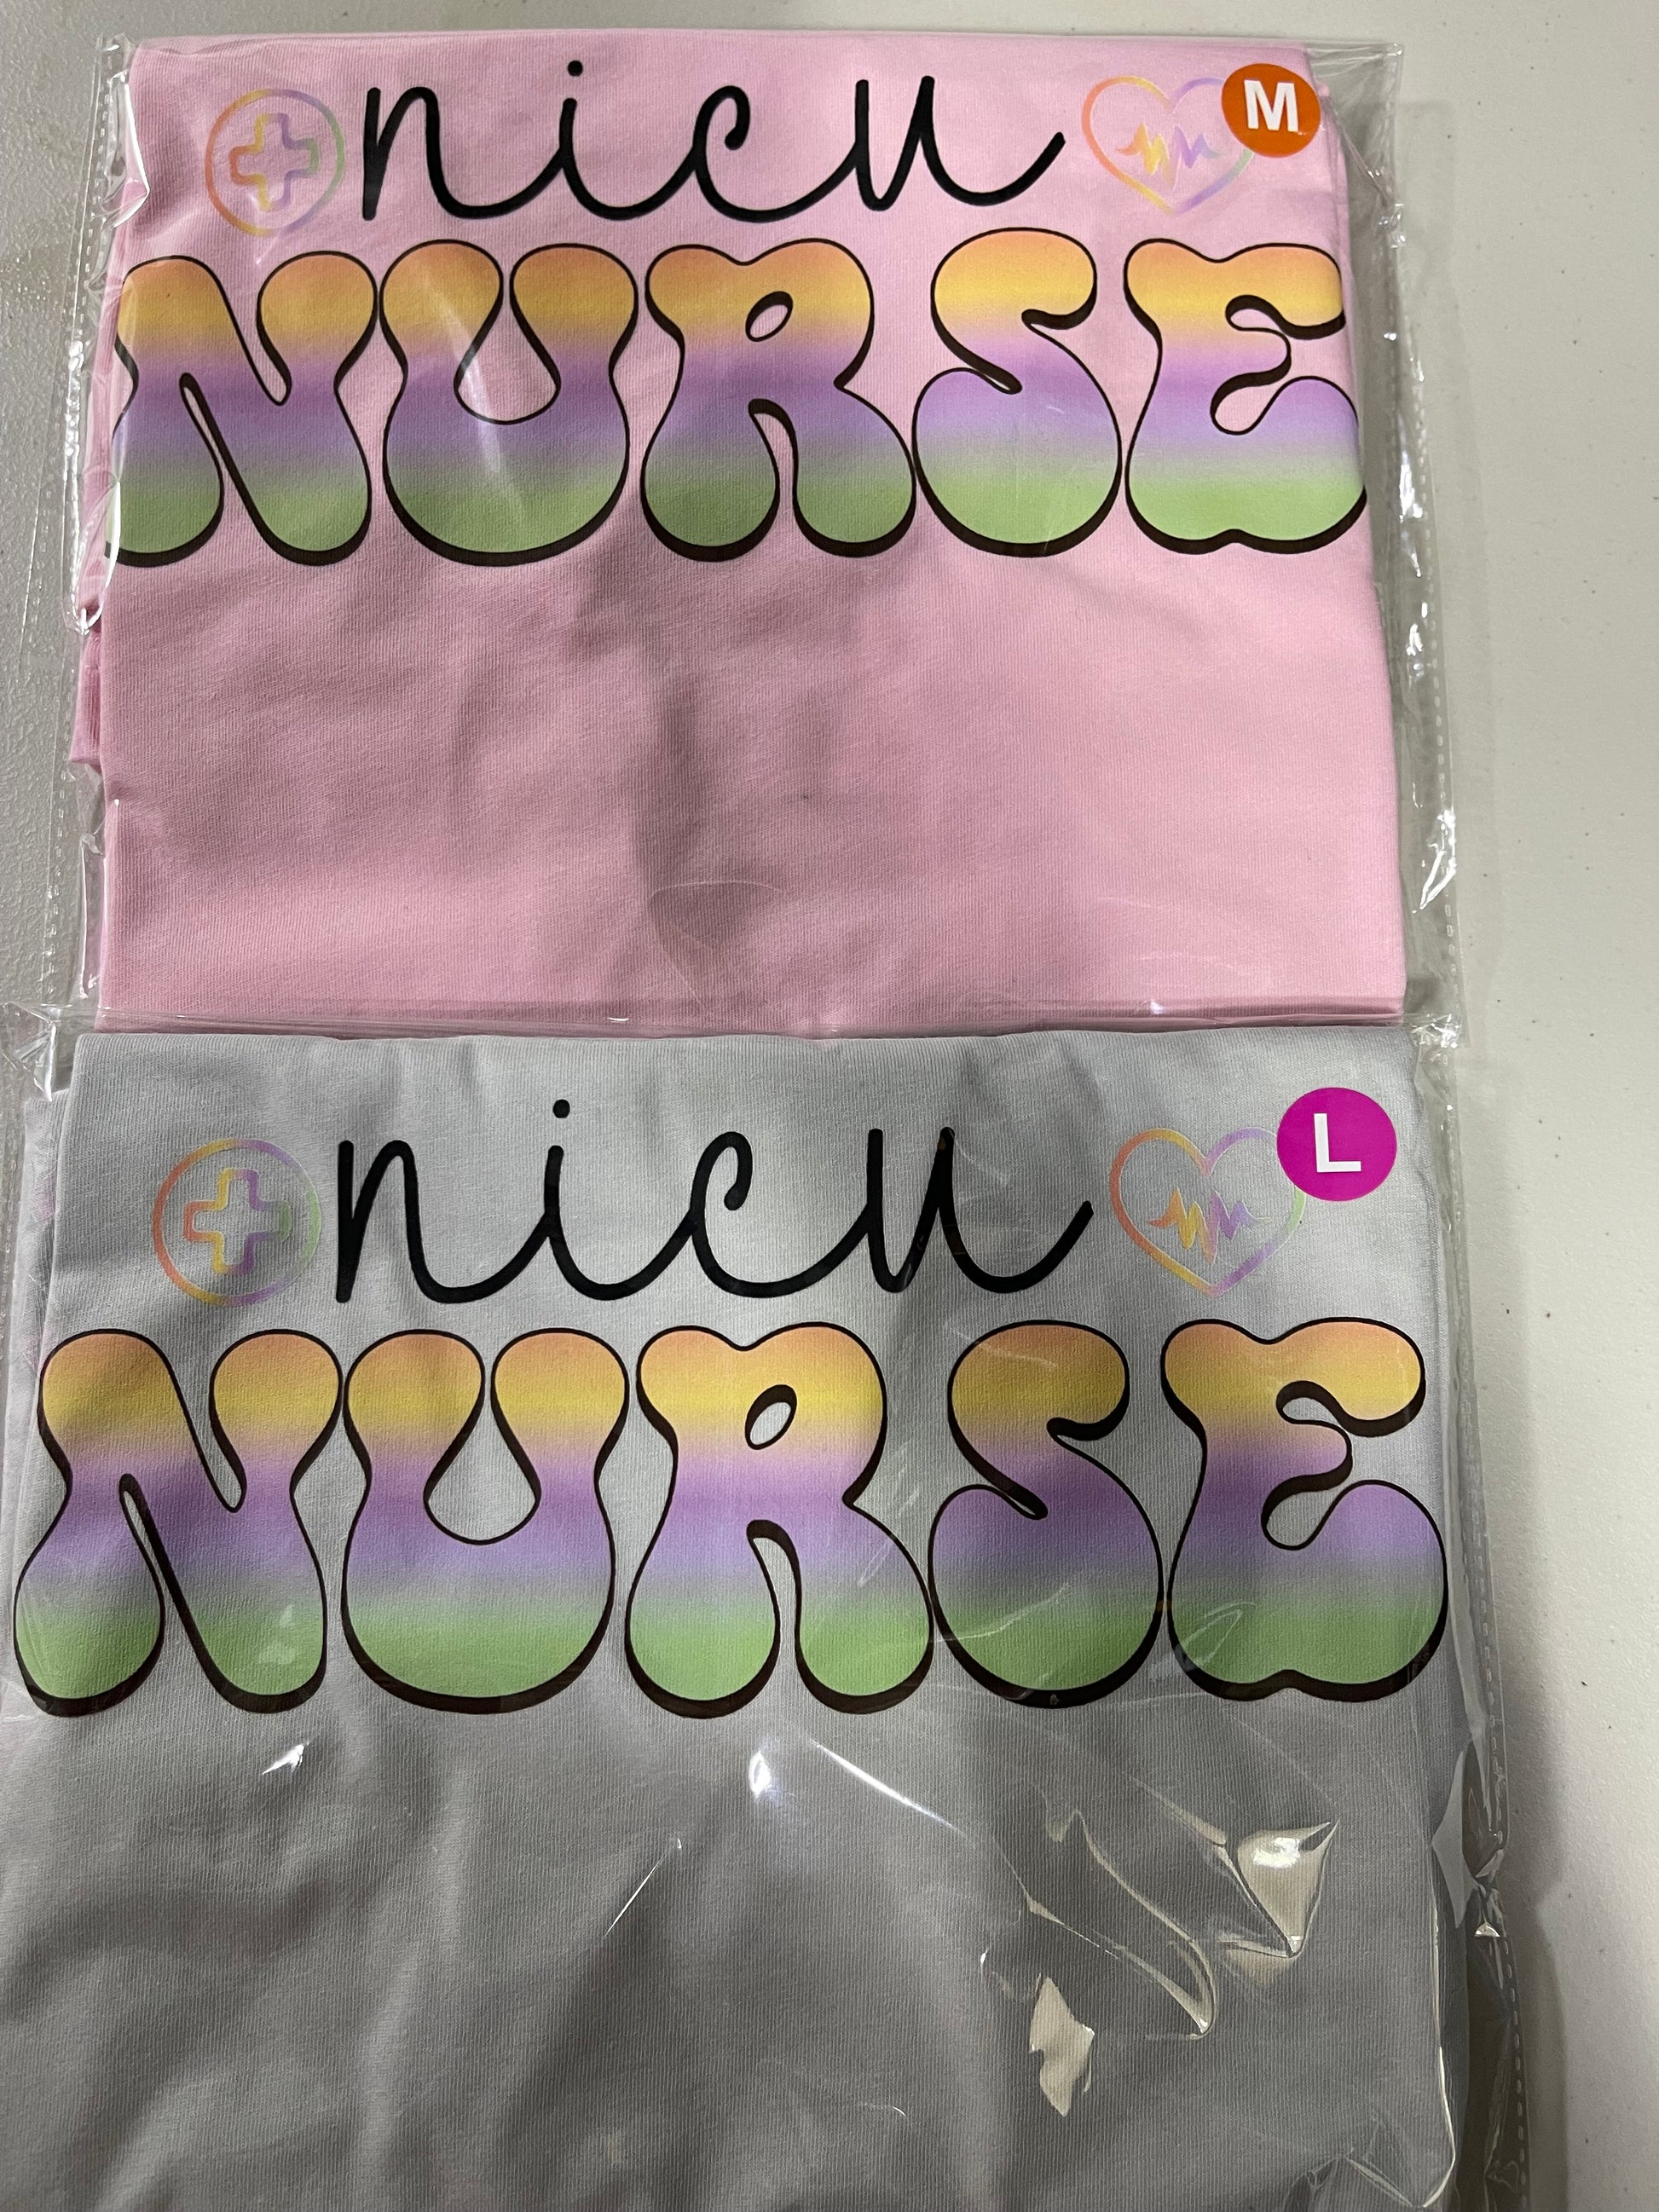 Nursing T-shirts